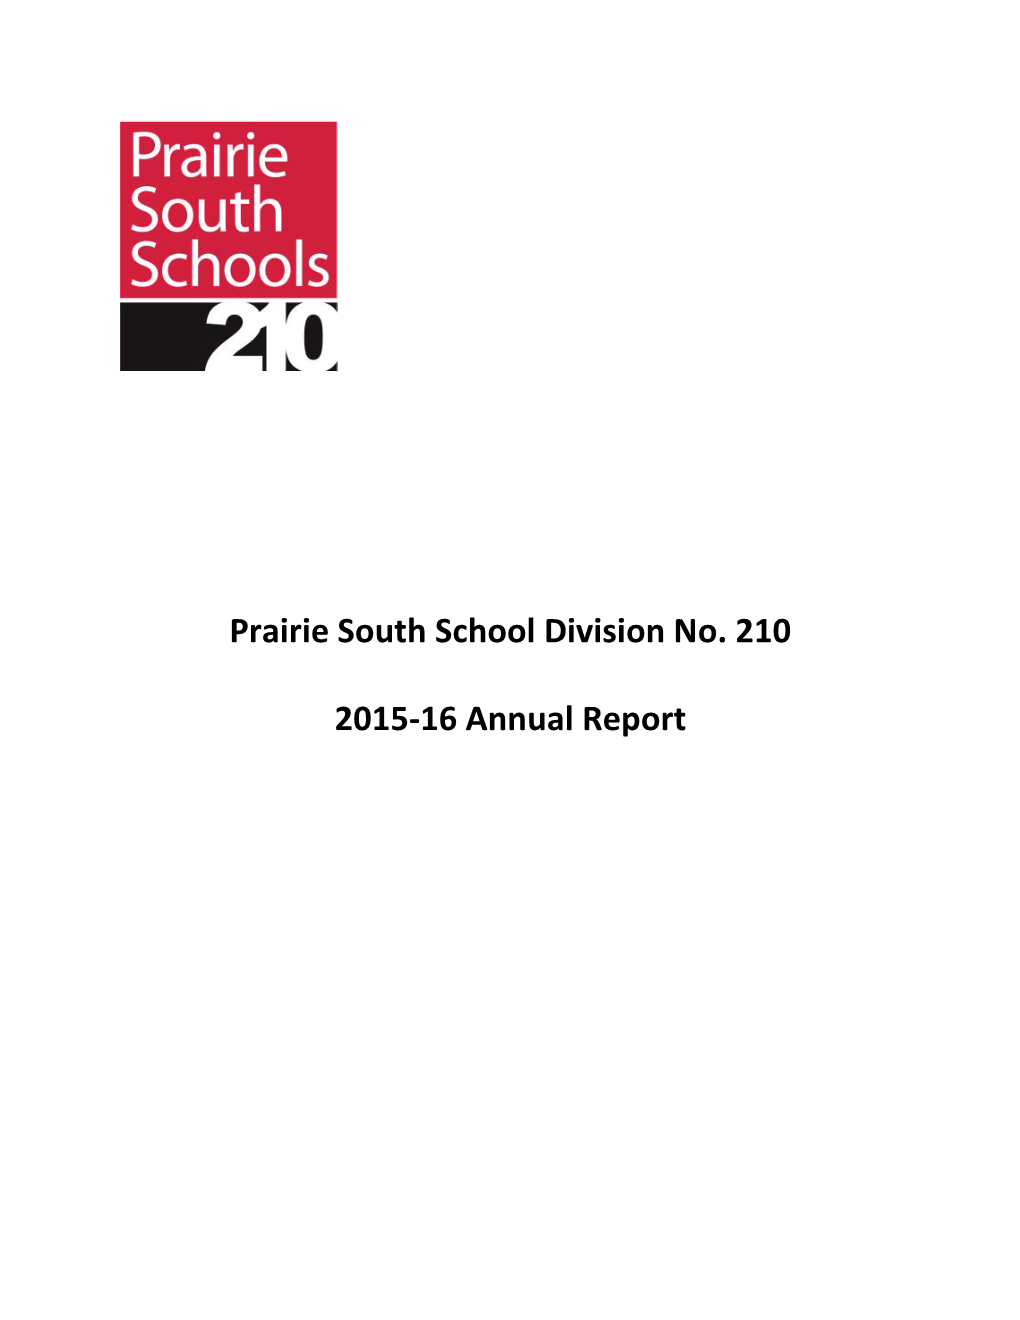 Prairie South School Division No. 210 2015-16 Annual Report